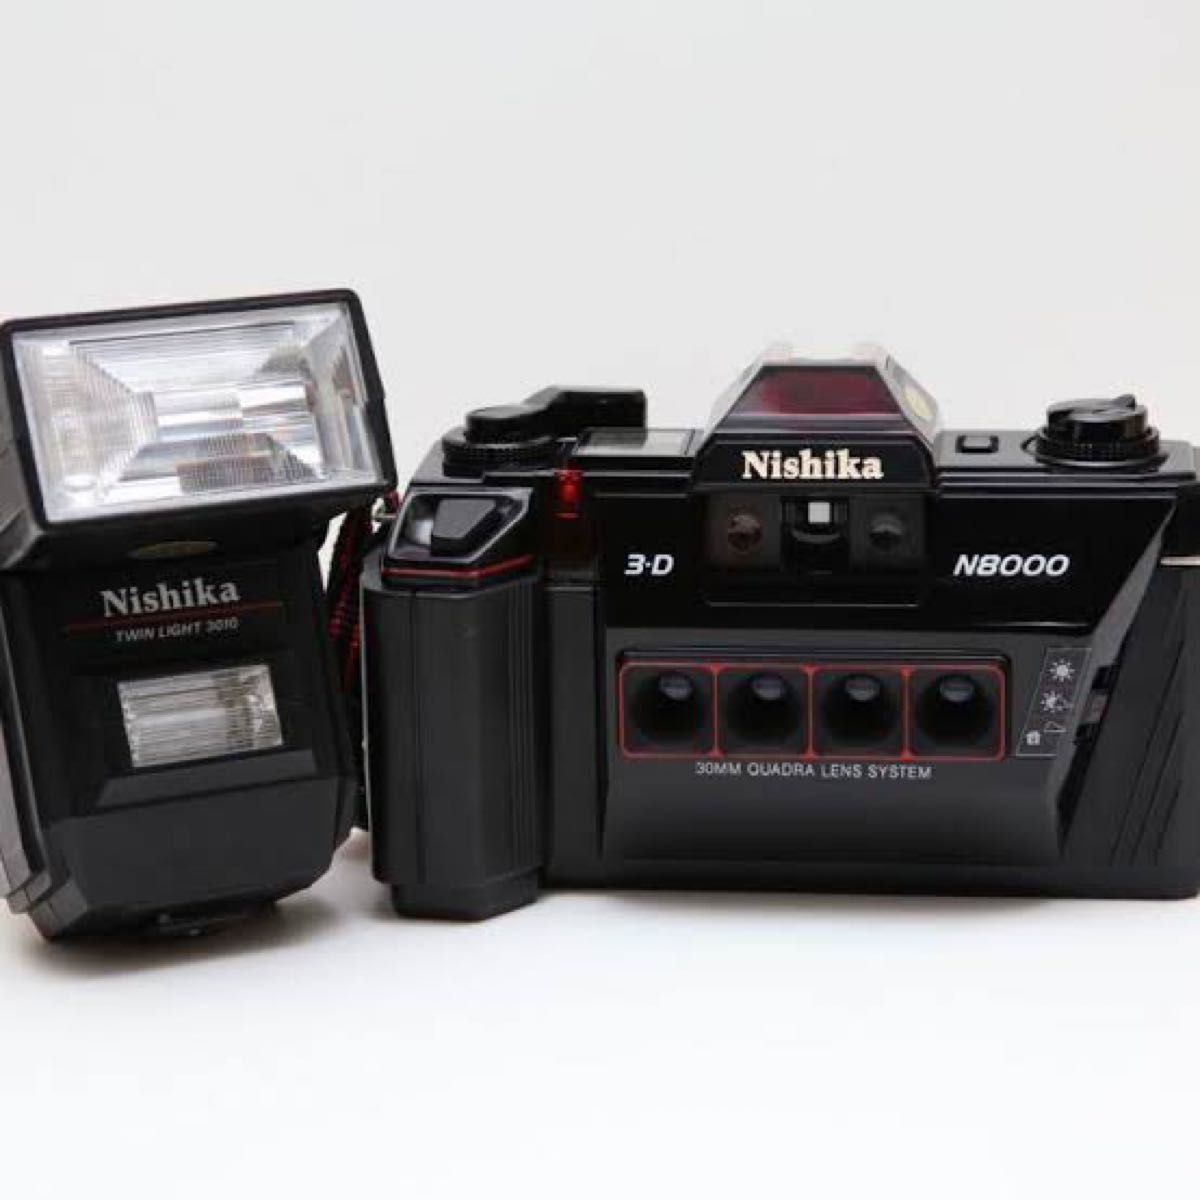 Nishika N8000 TWIN LIGHT3010 ニシカ - カメラ